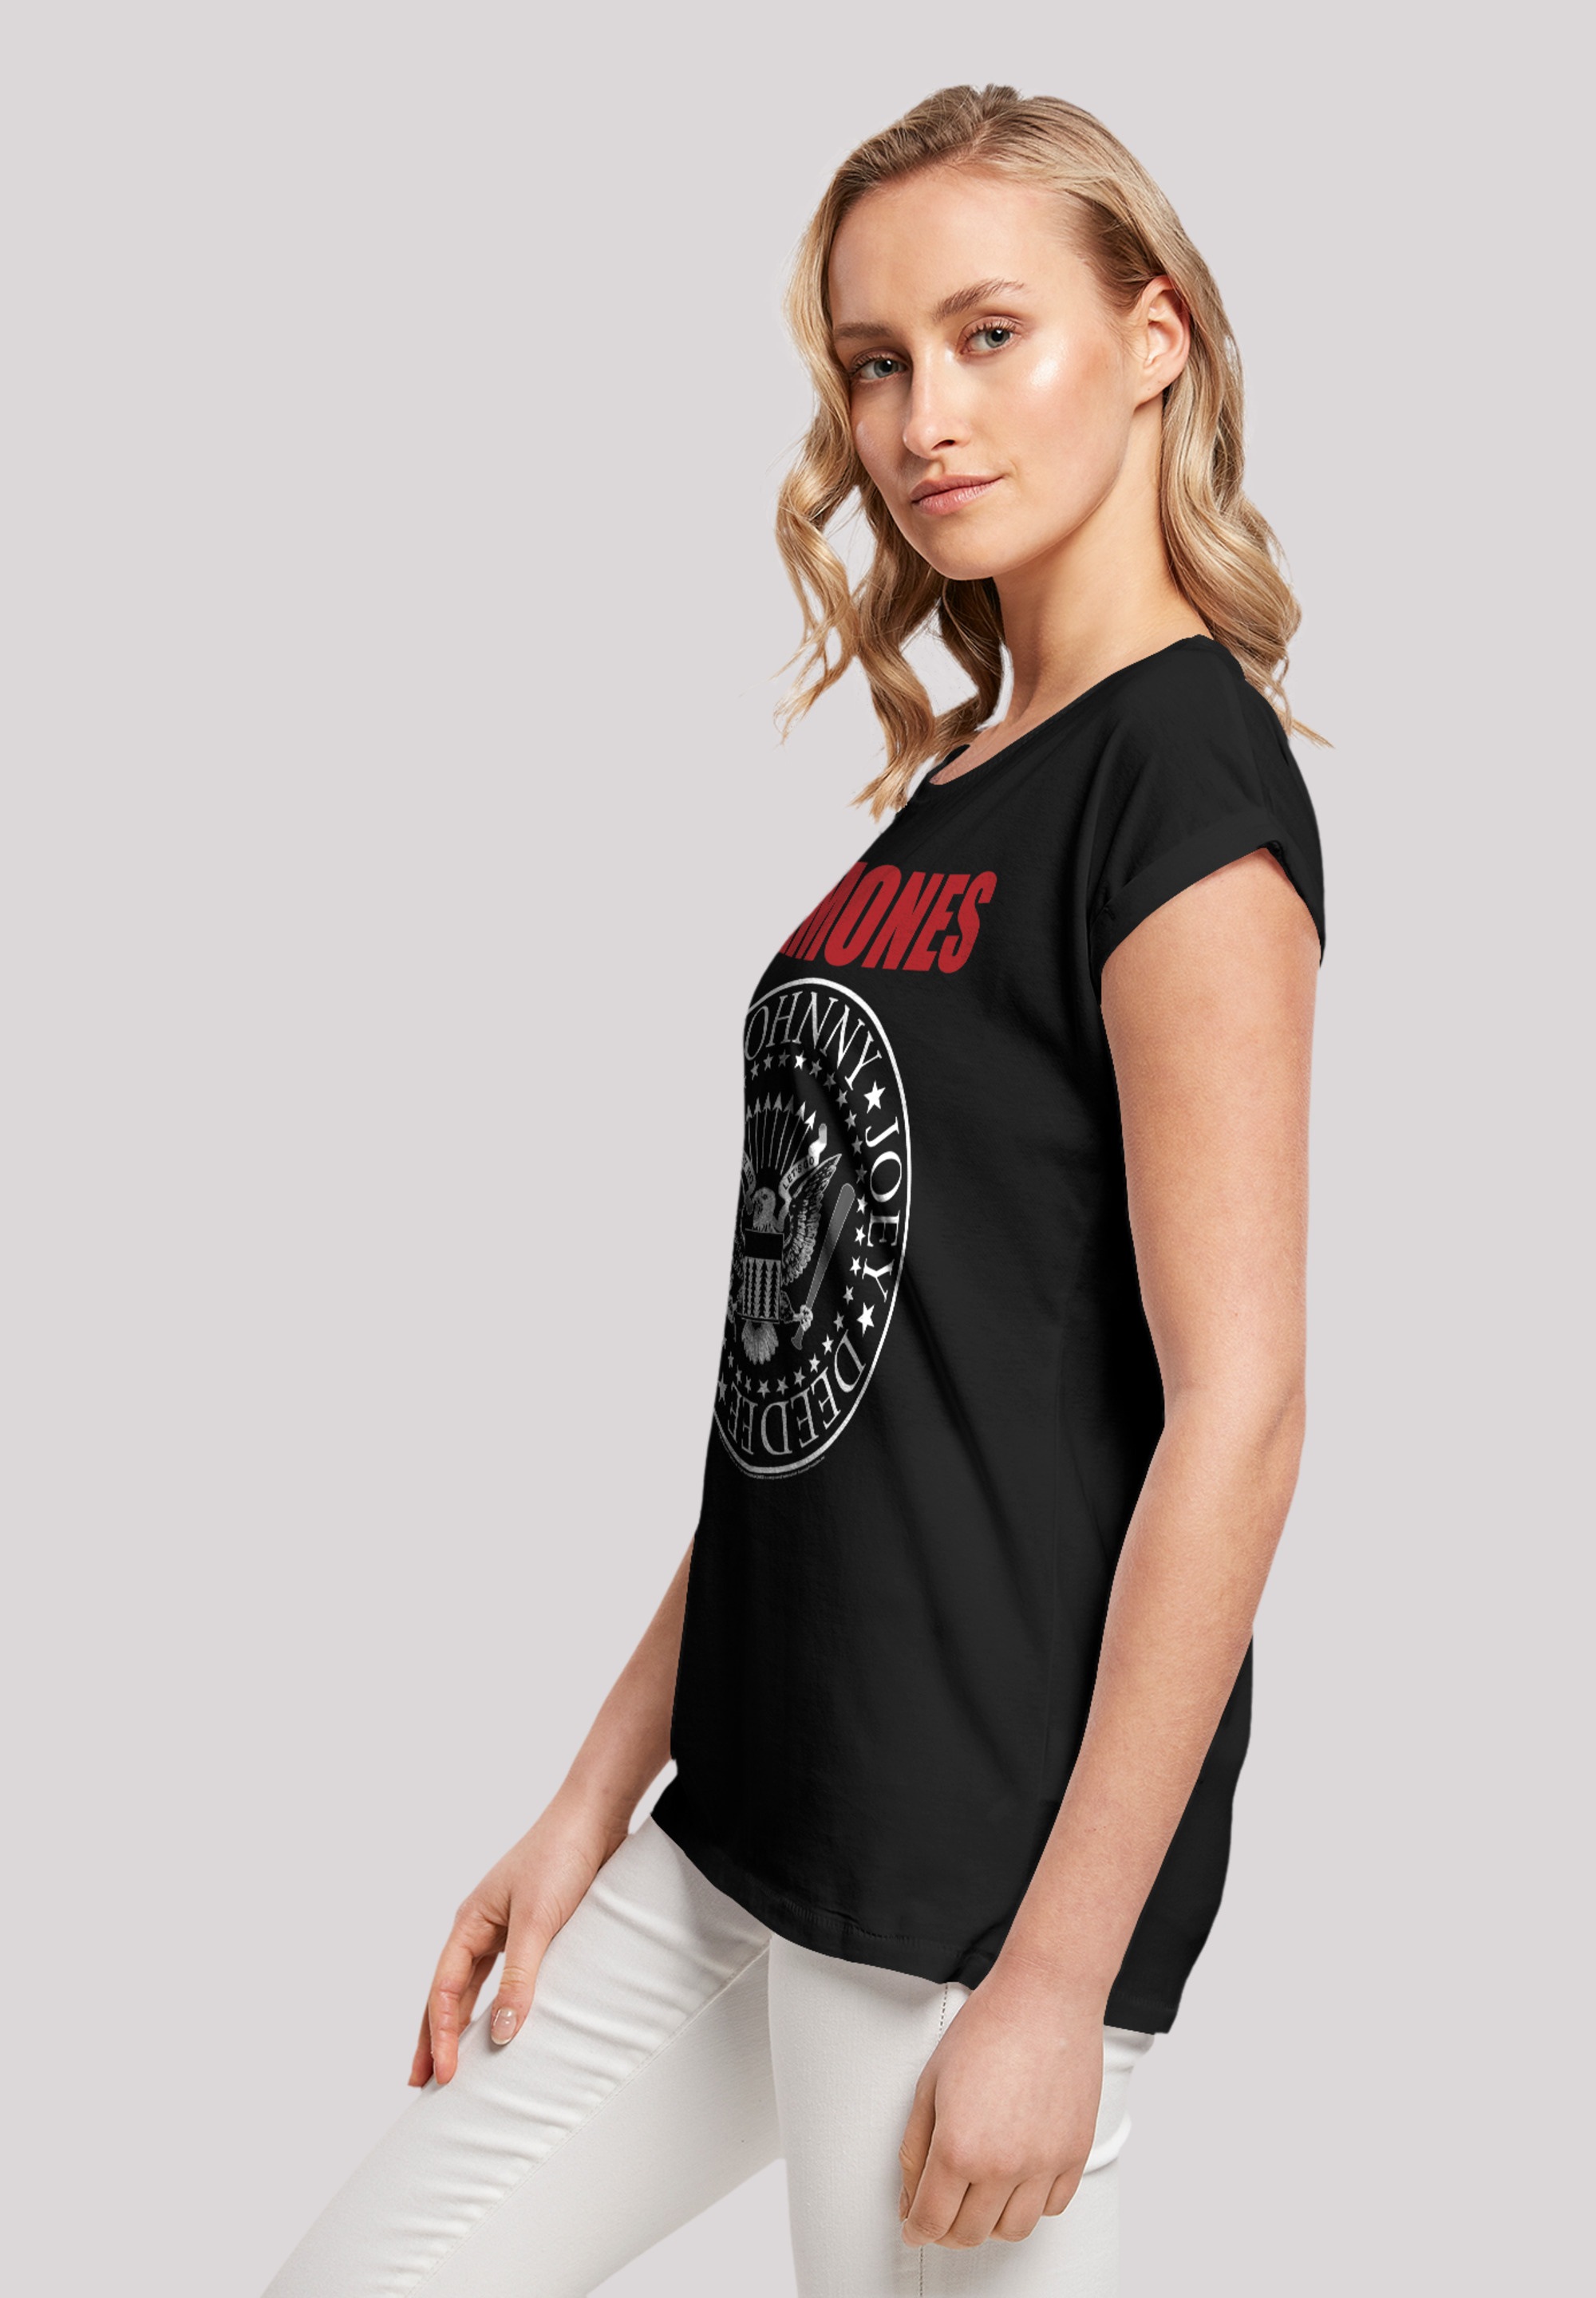 F4NT4STIC T-Shirt »Ramones Rock Musik Band Red Text Seal«, Premium Qualität,  Band, Rock-Musik online kaufen | I\'m walking